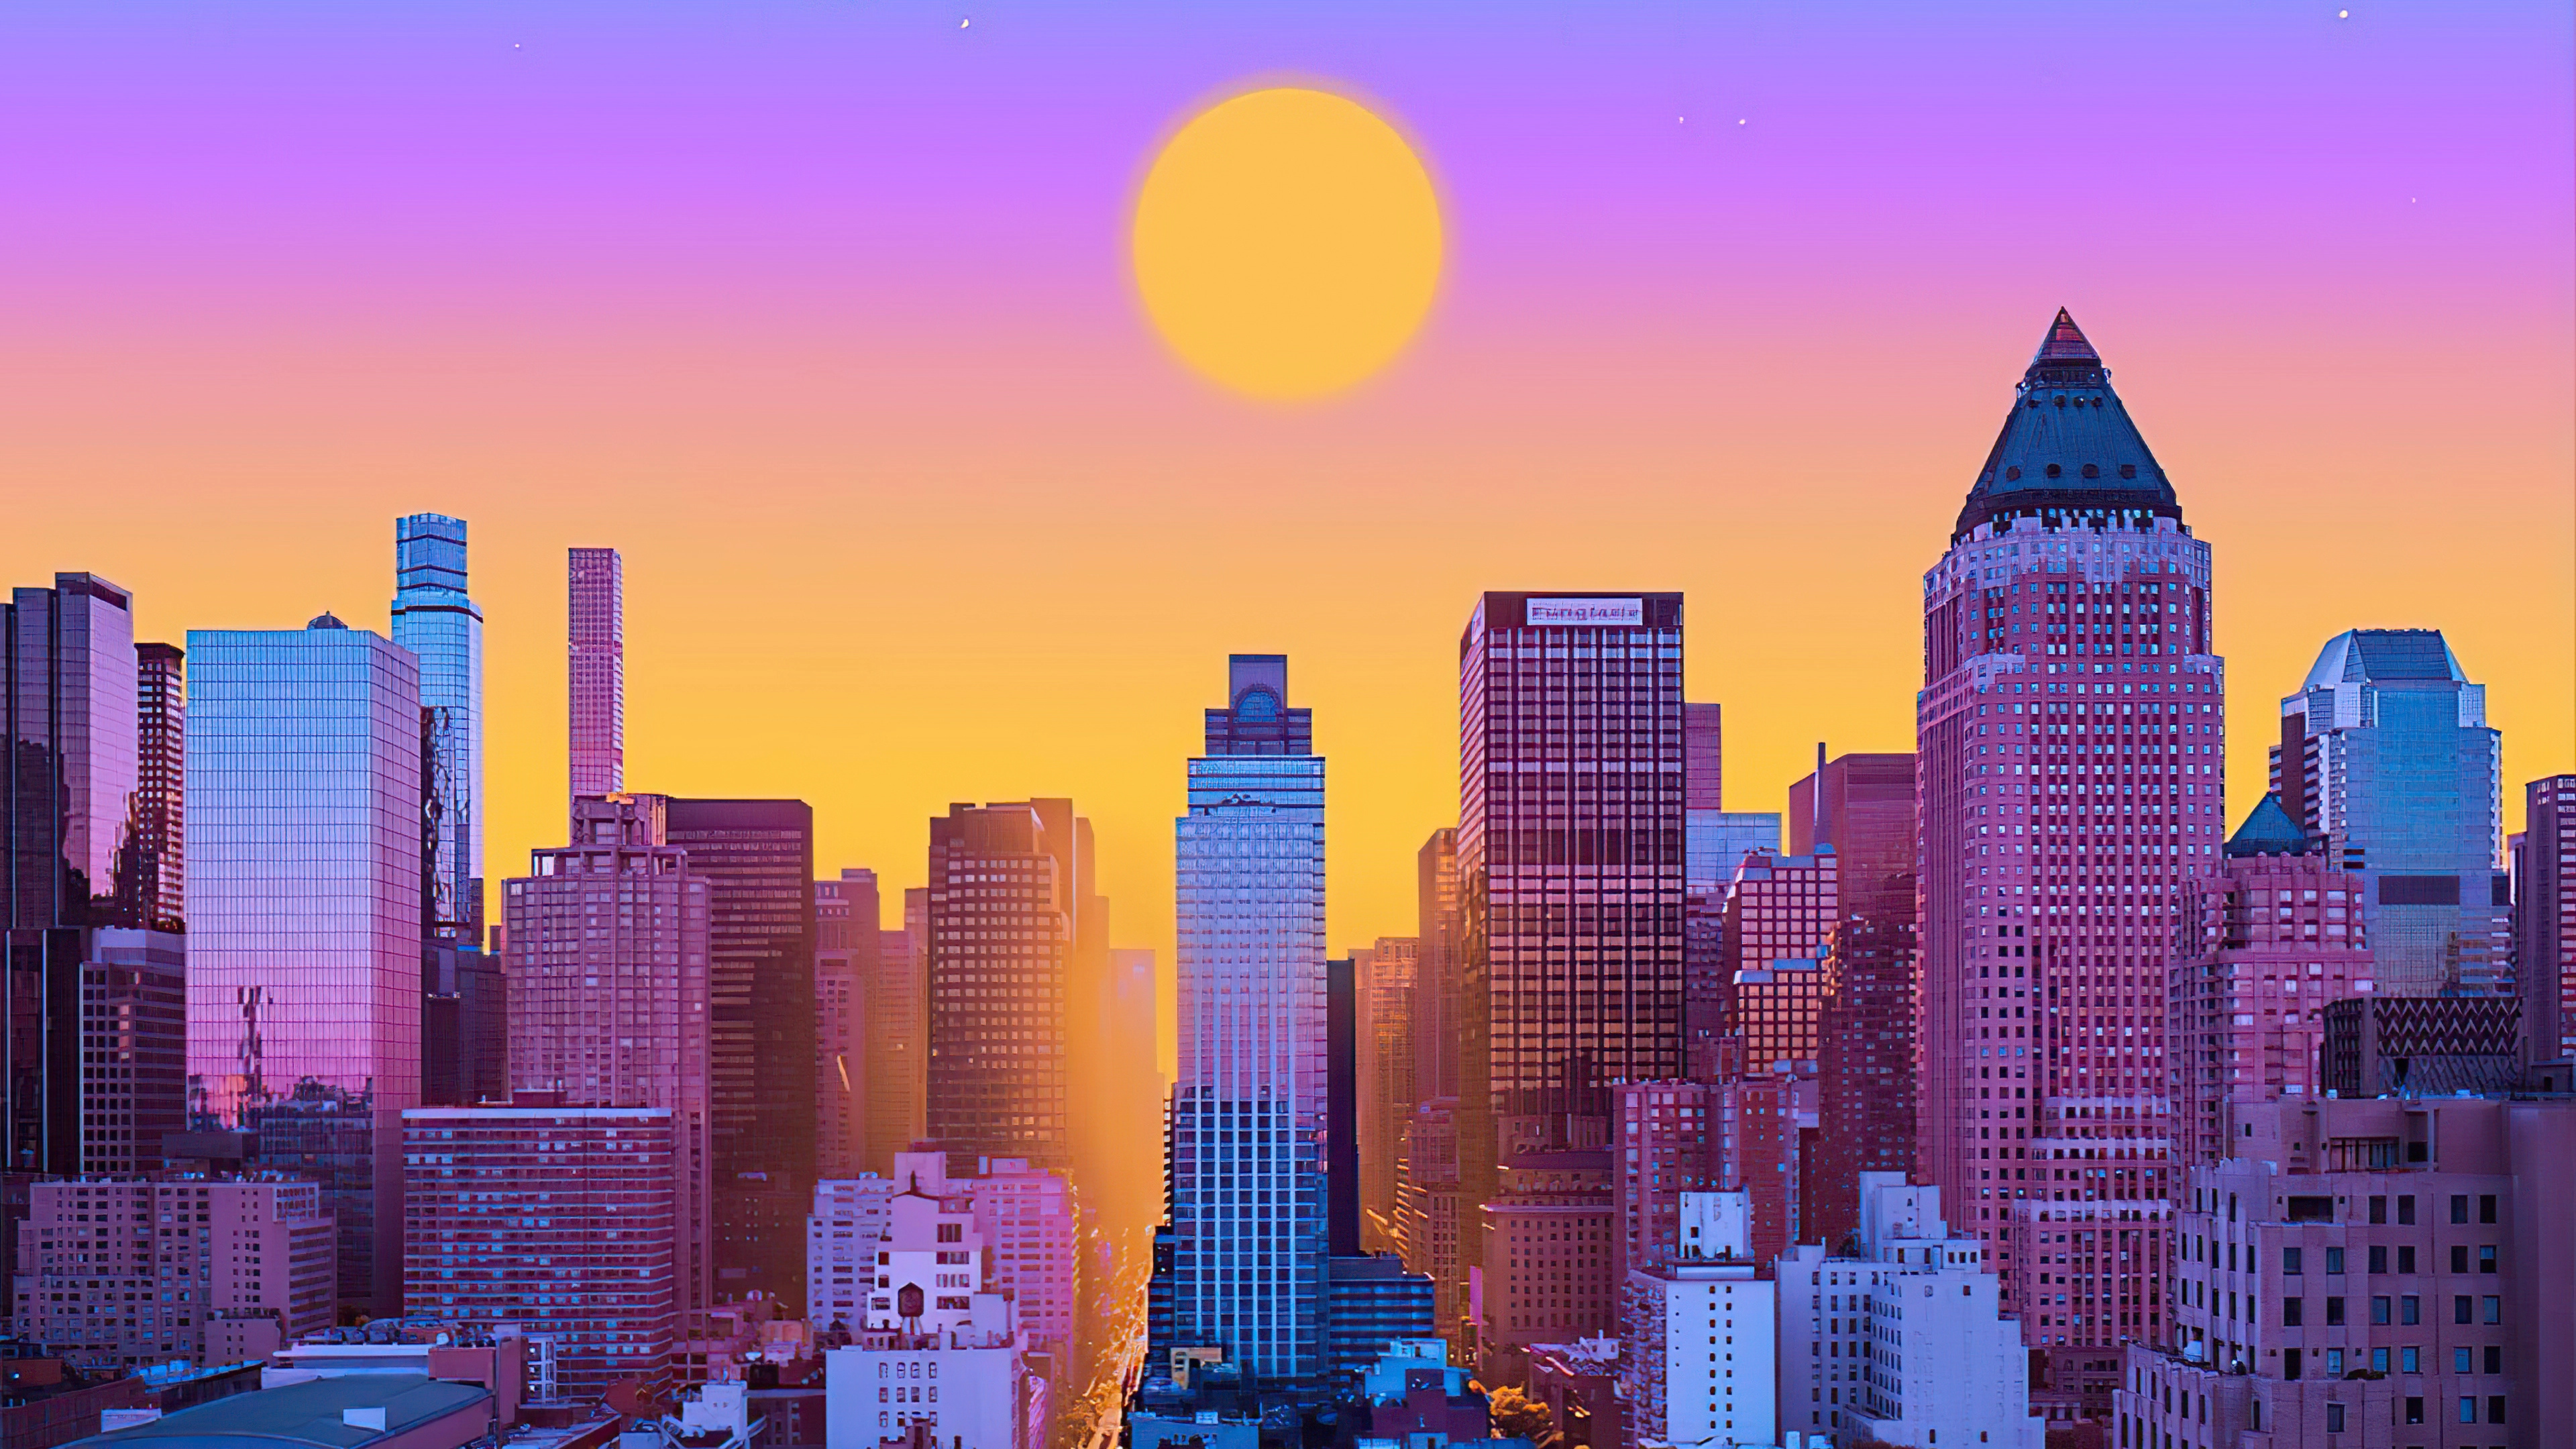 New York: Big Apple, Morning, Digital art. 3840x2160 4K Background.